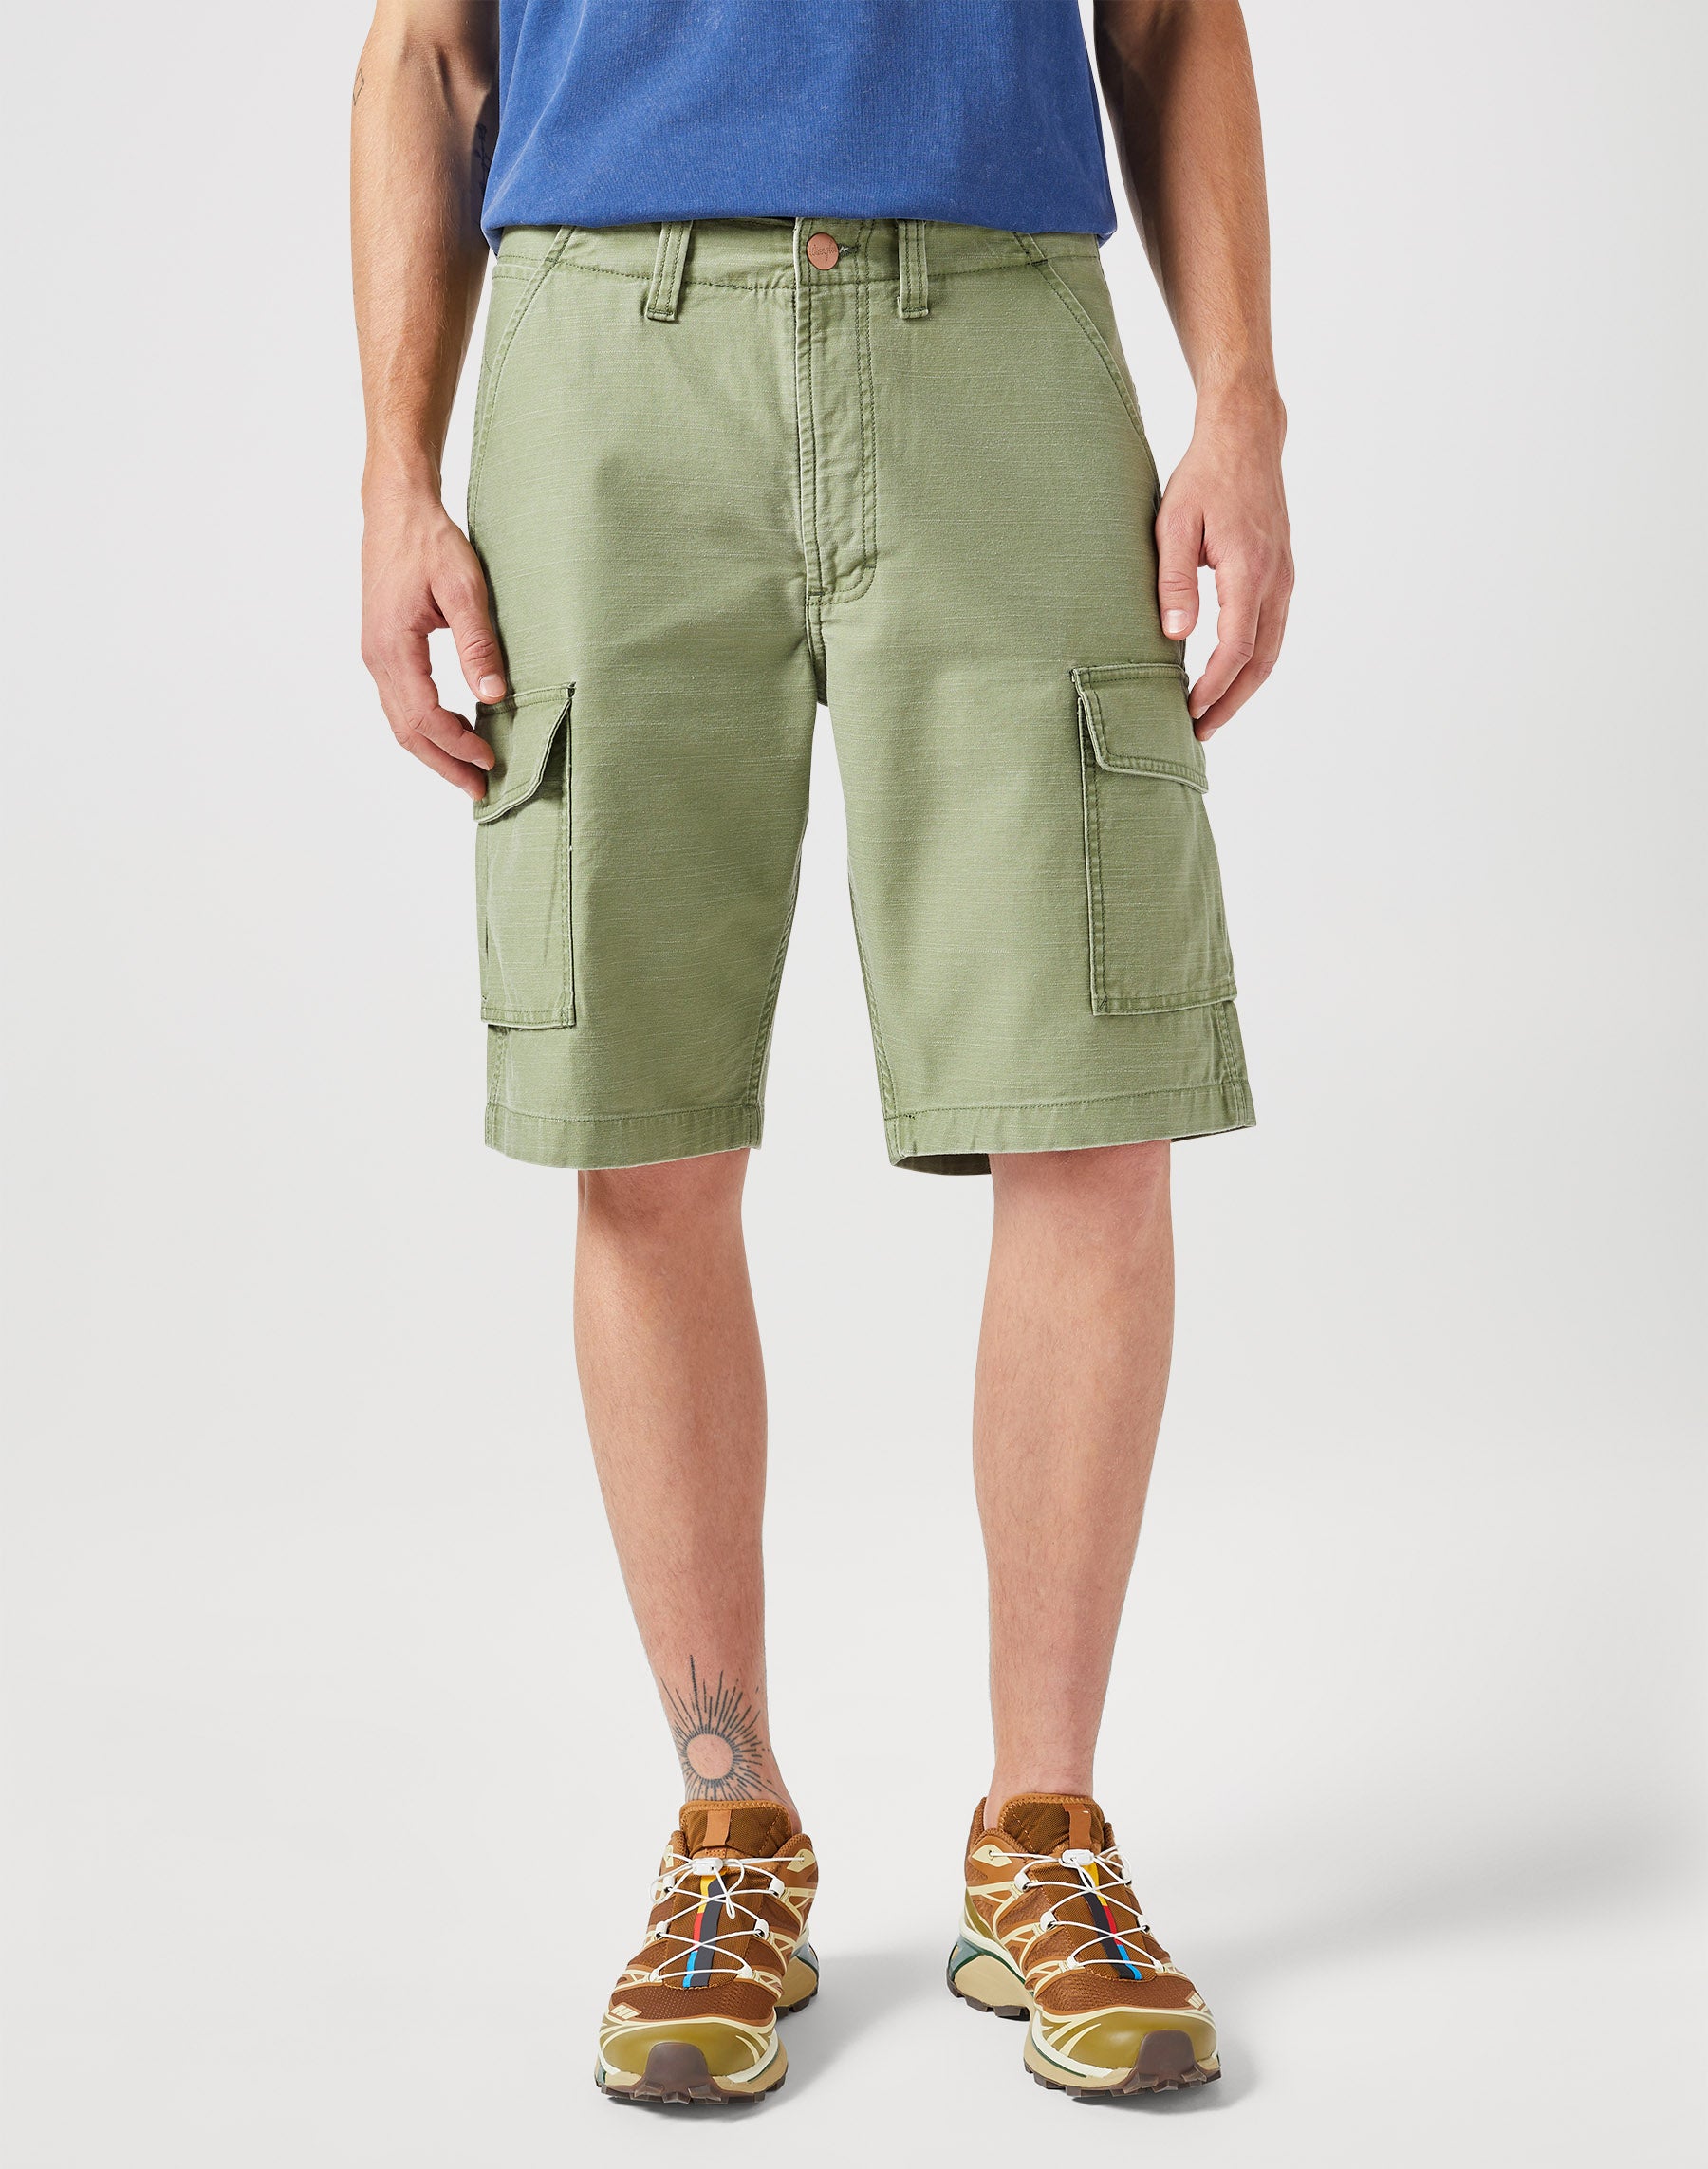 Casey Cargo Shorts in Olive Shorts Wrangler   